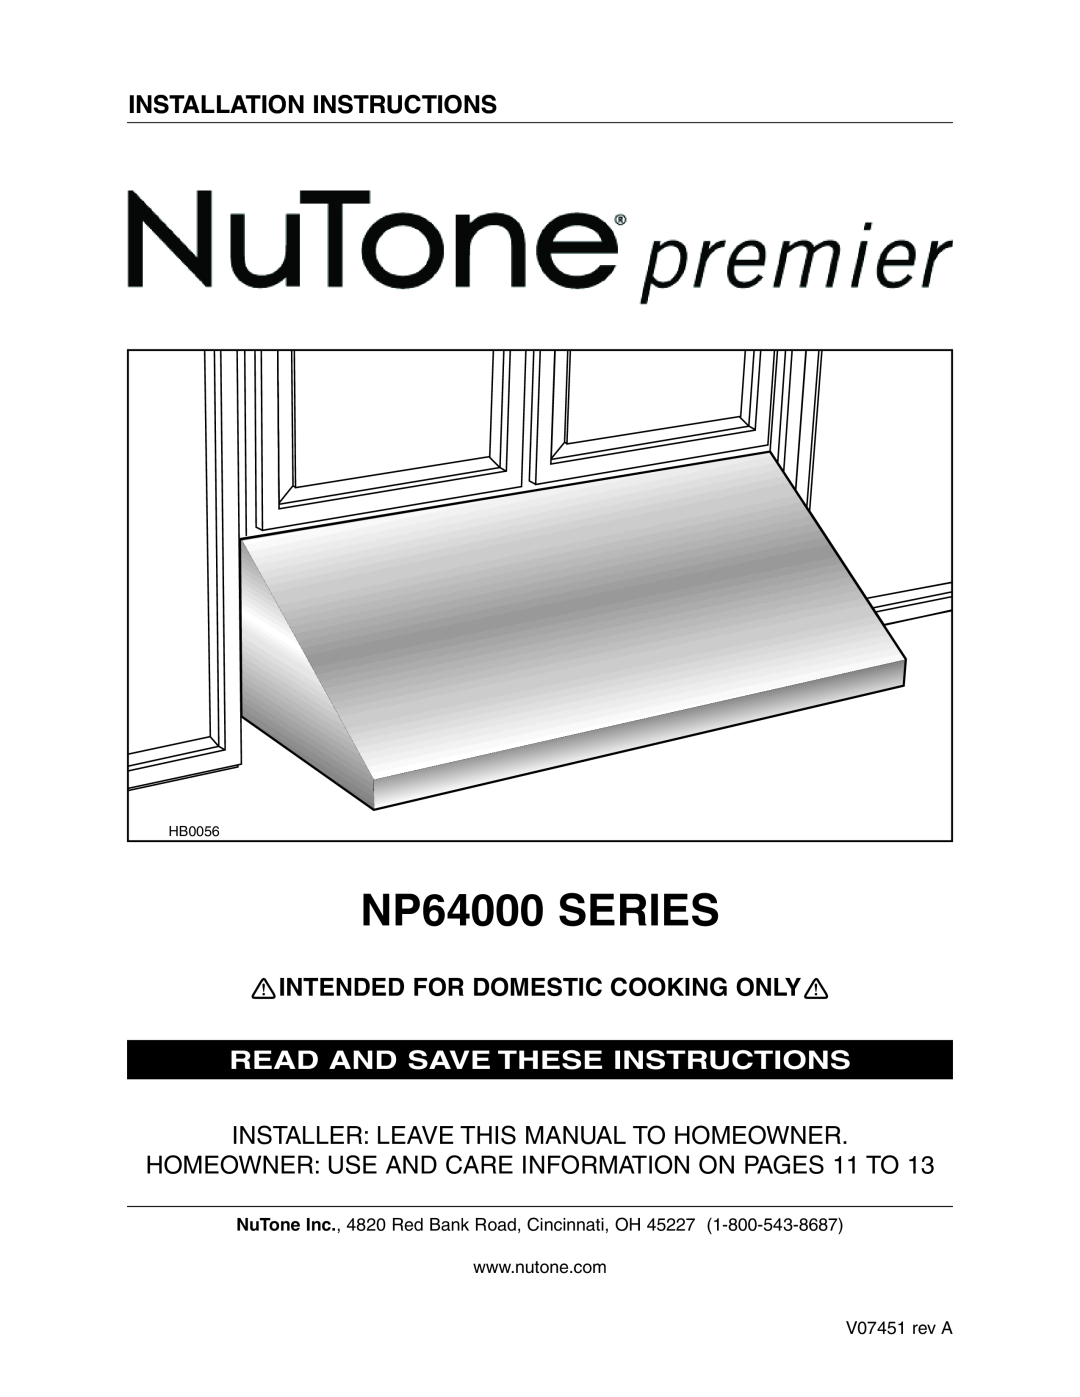 NuTone manual NuTone Inc., 4820 Red Bank Road, Cincinnati, OH, V07451 rev A, NP64000 SERIES, Installation Instructions 